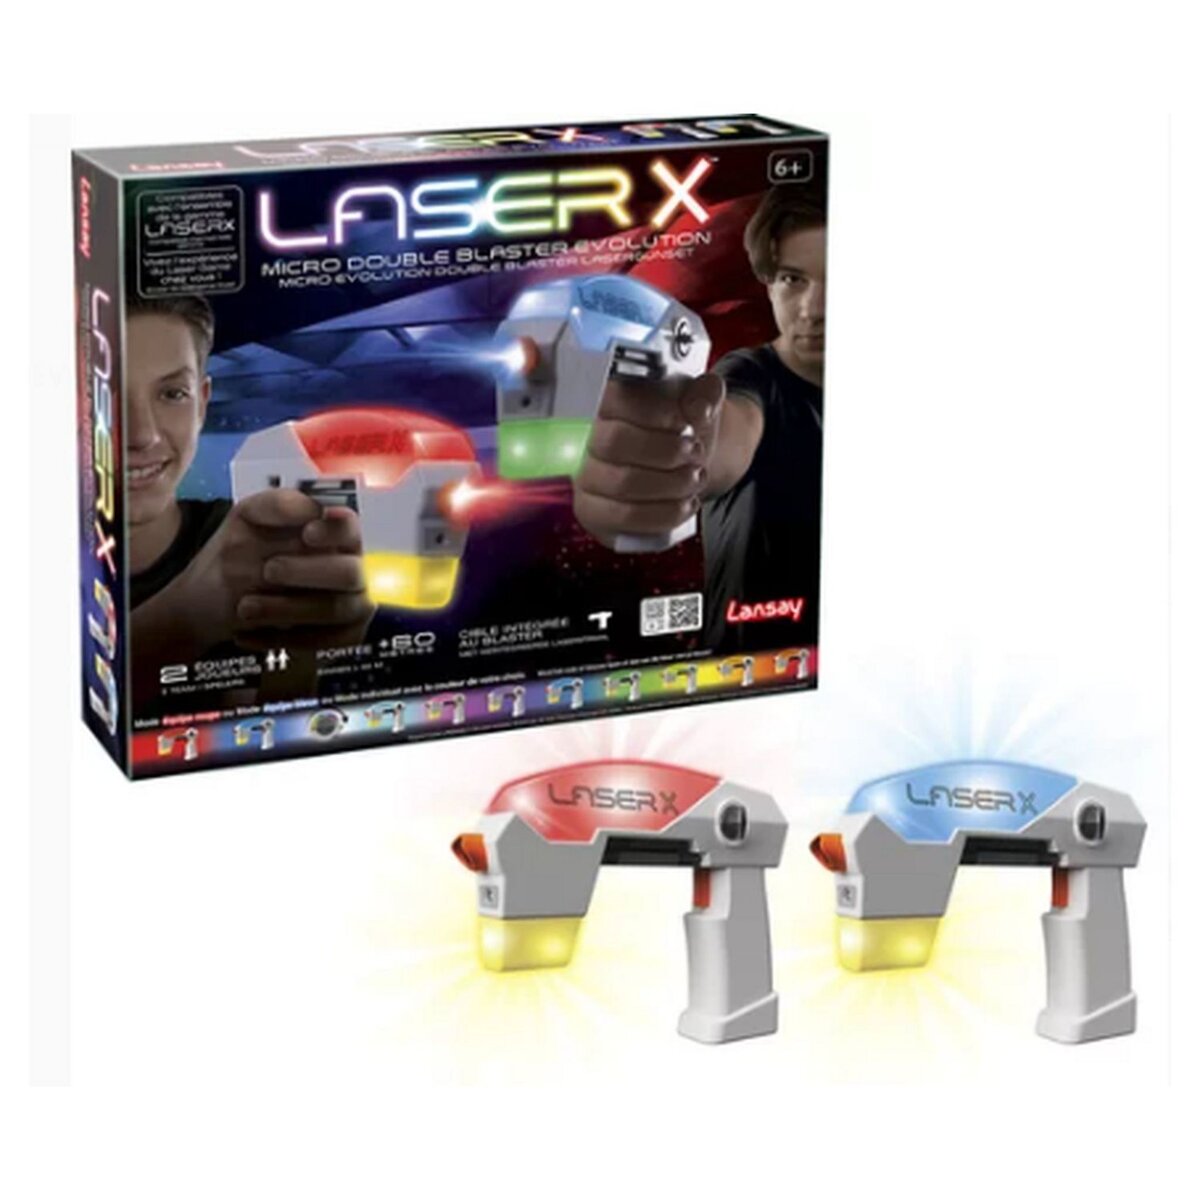 LANSAY Laser X Micro double blaster évolution